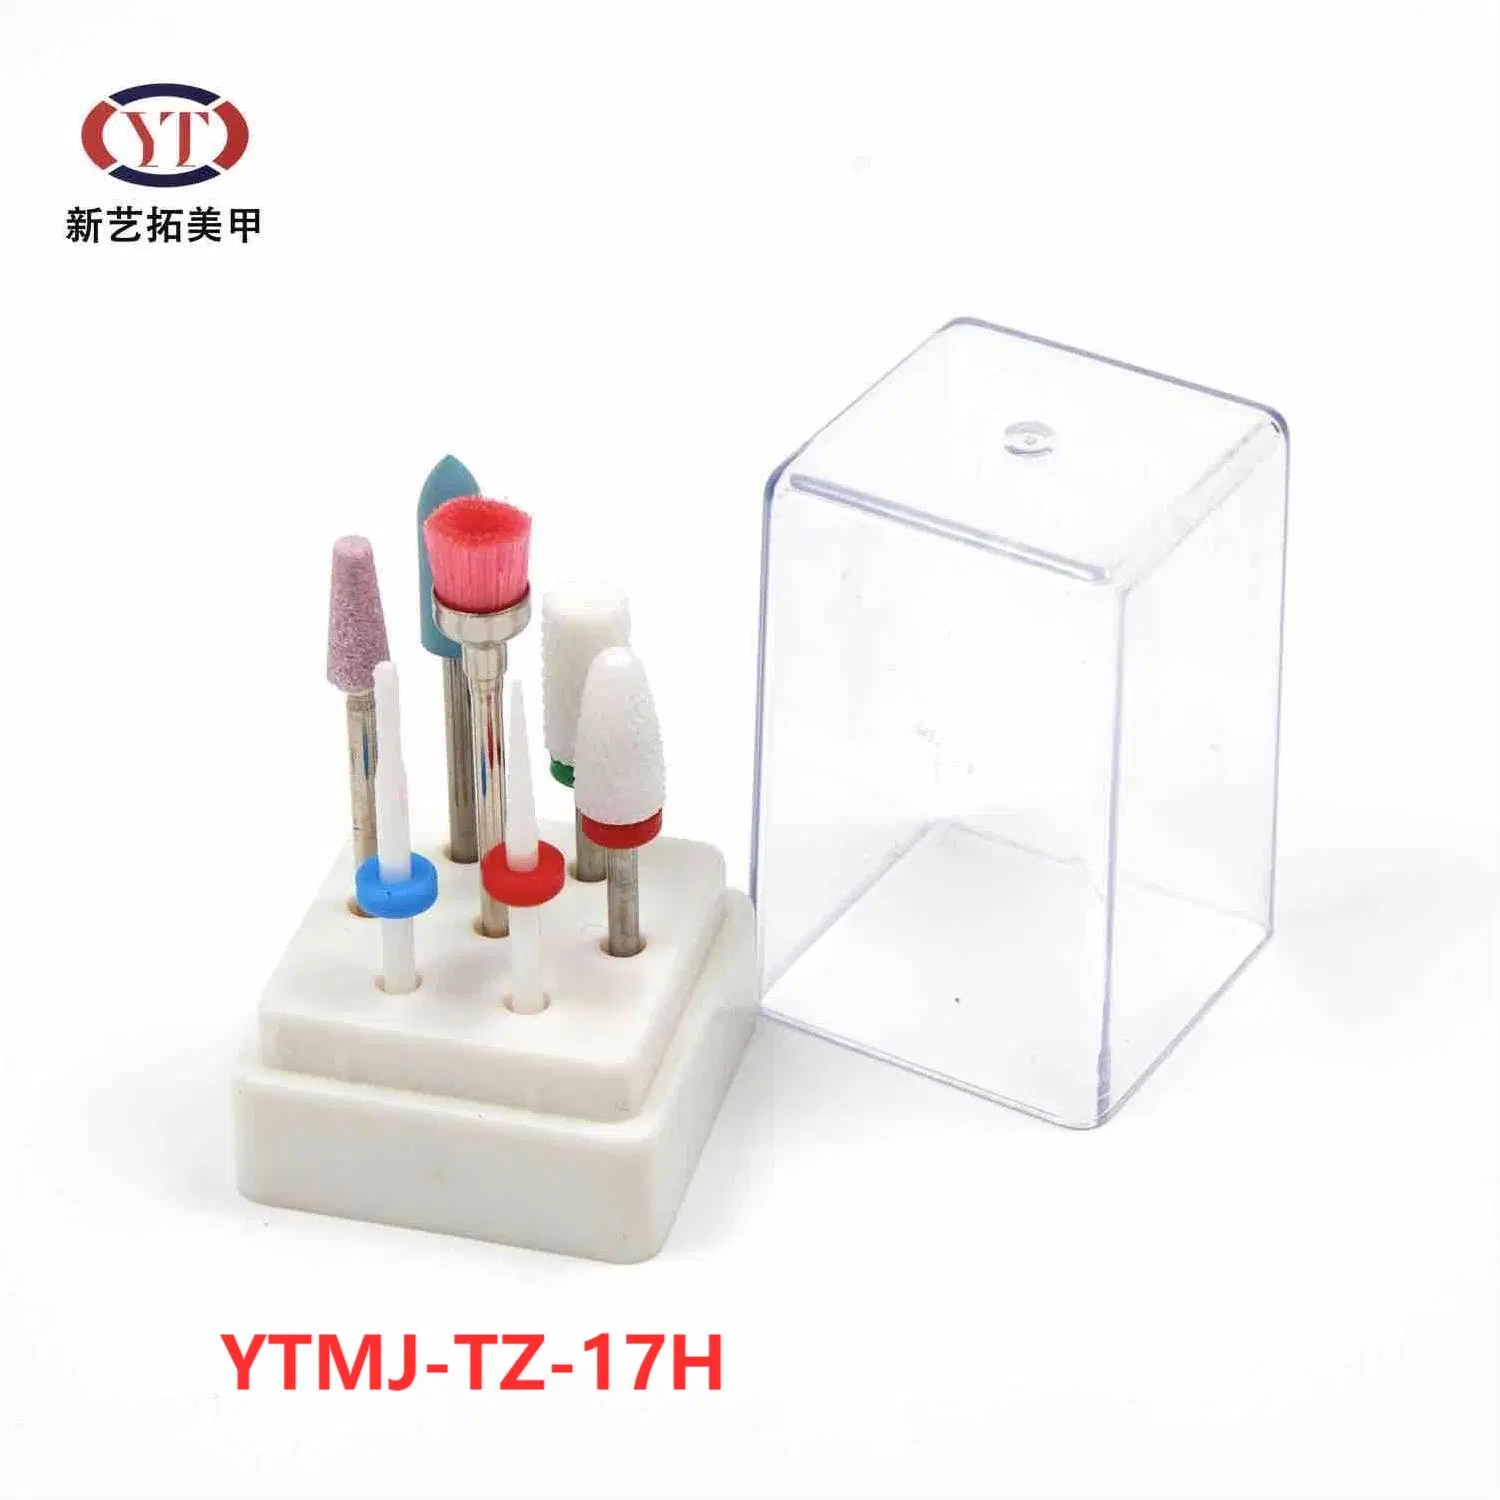 Ytmj-Tz-17h 7PCS prego de cerâmica de carboneto de tungstênio Brocas Definir Electric Manicure Pedicure Burr semeadoras de Arquivo Bit de moagem